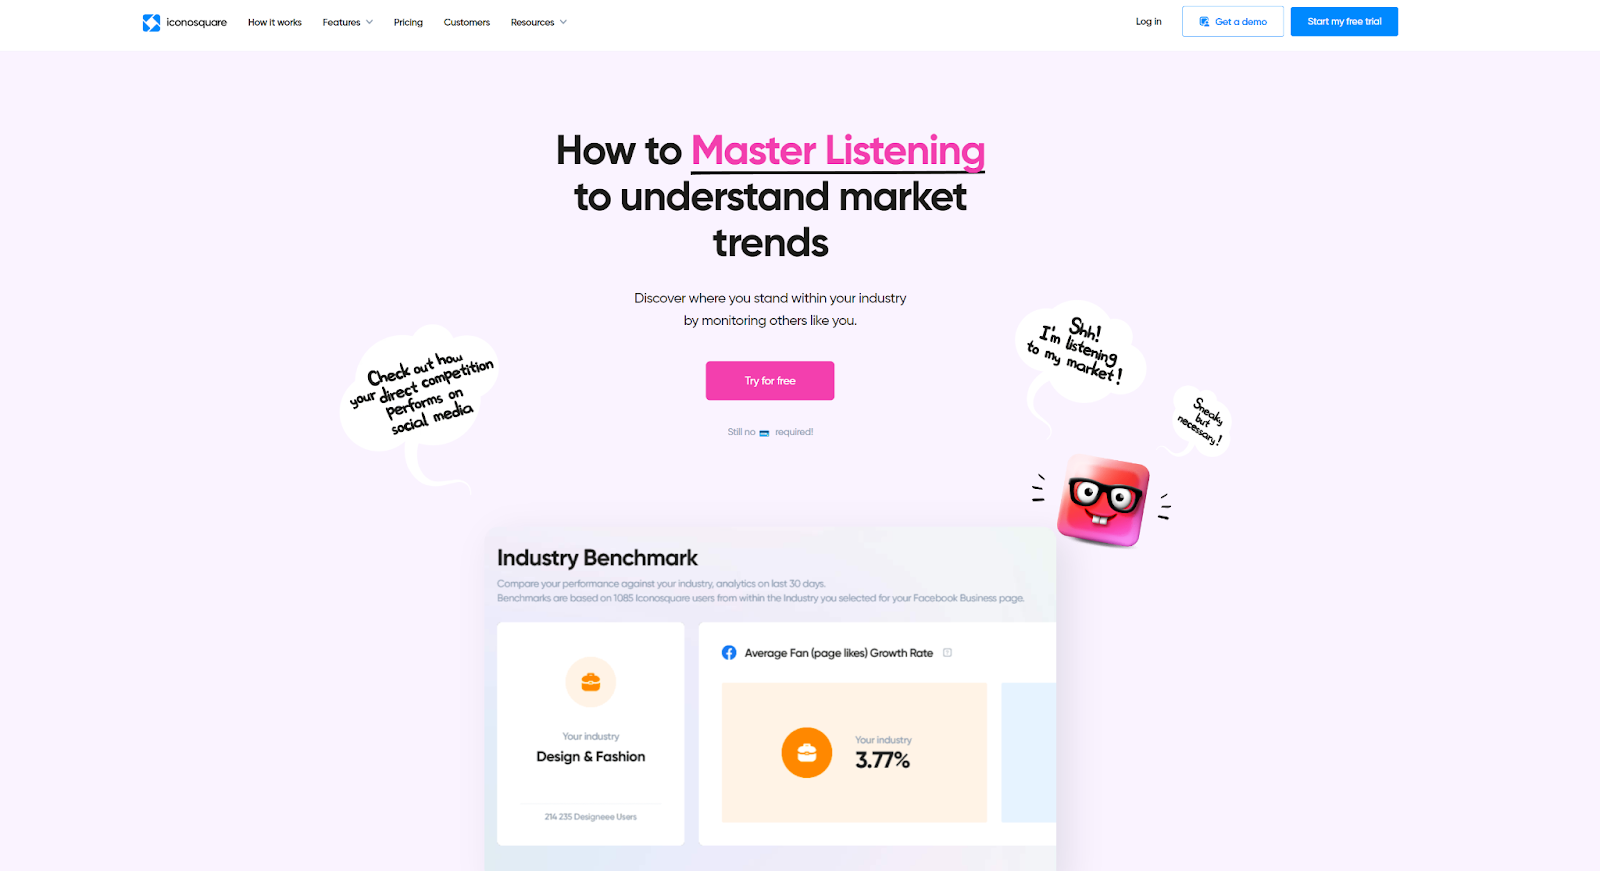 Iconosquare social listening tool
